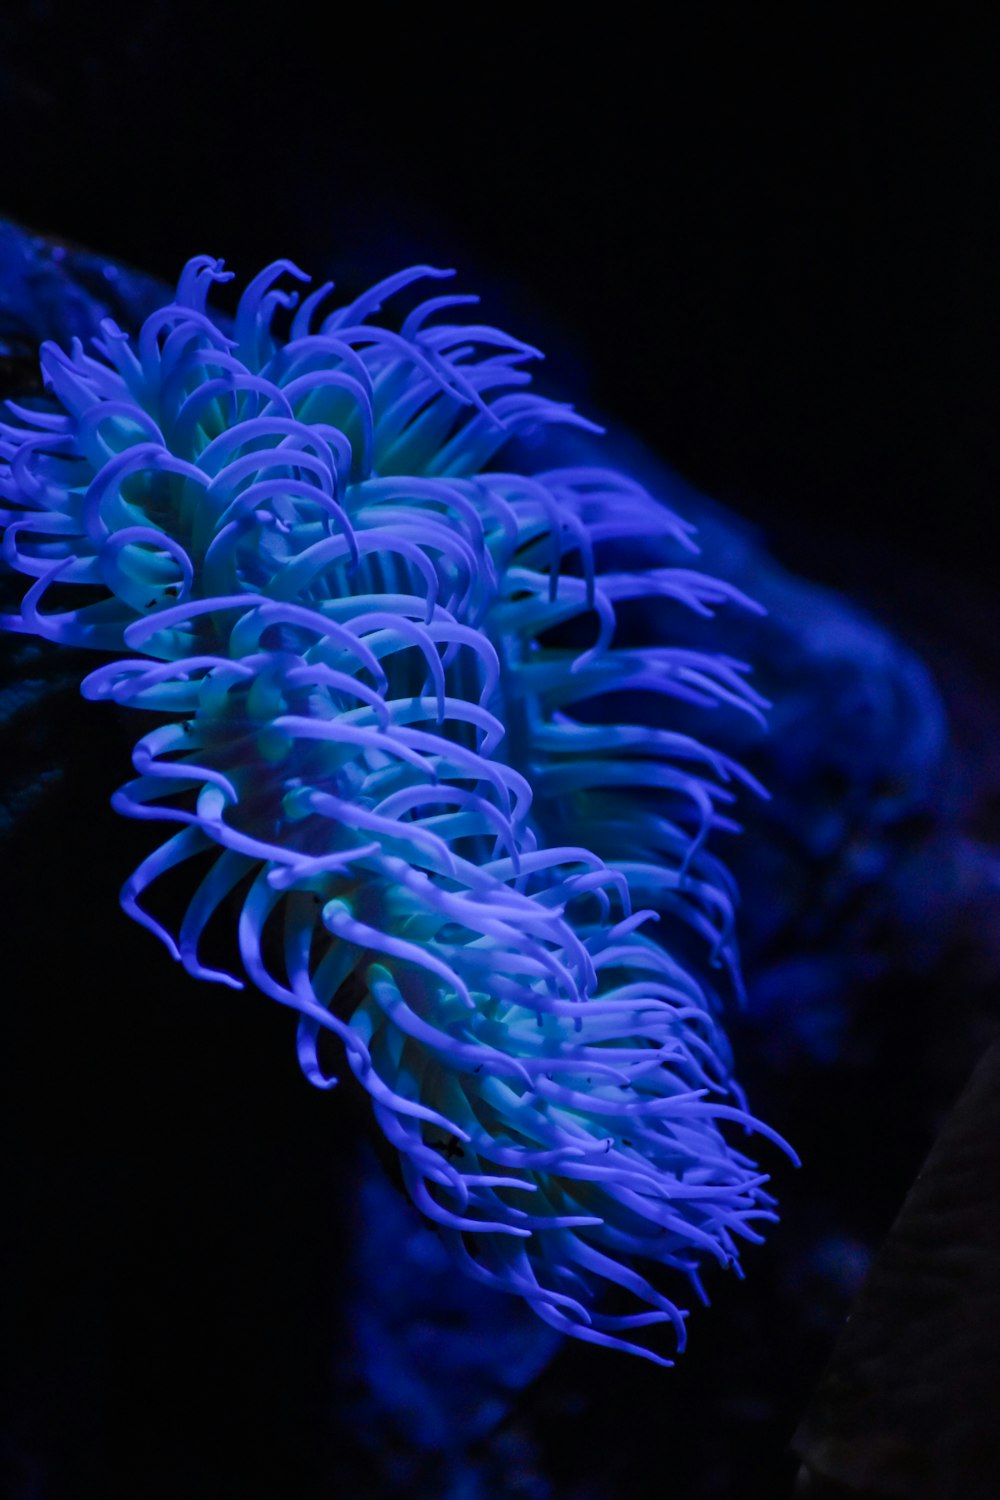 a blue sea anemone in an aquarium